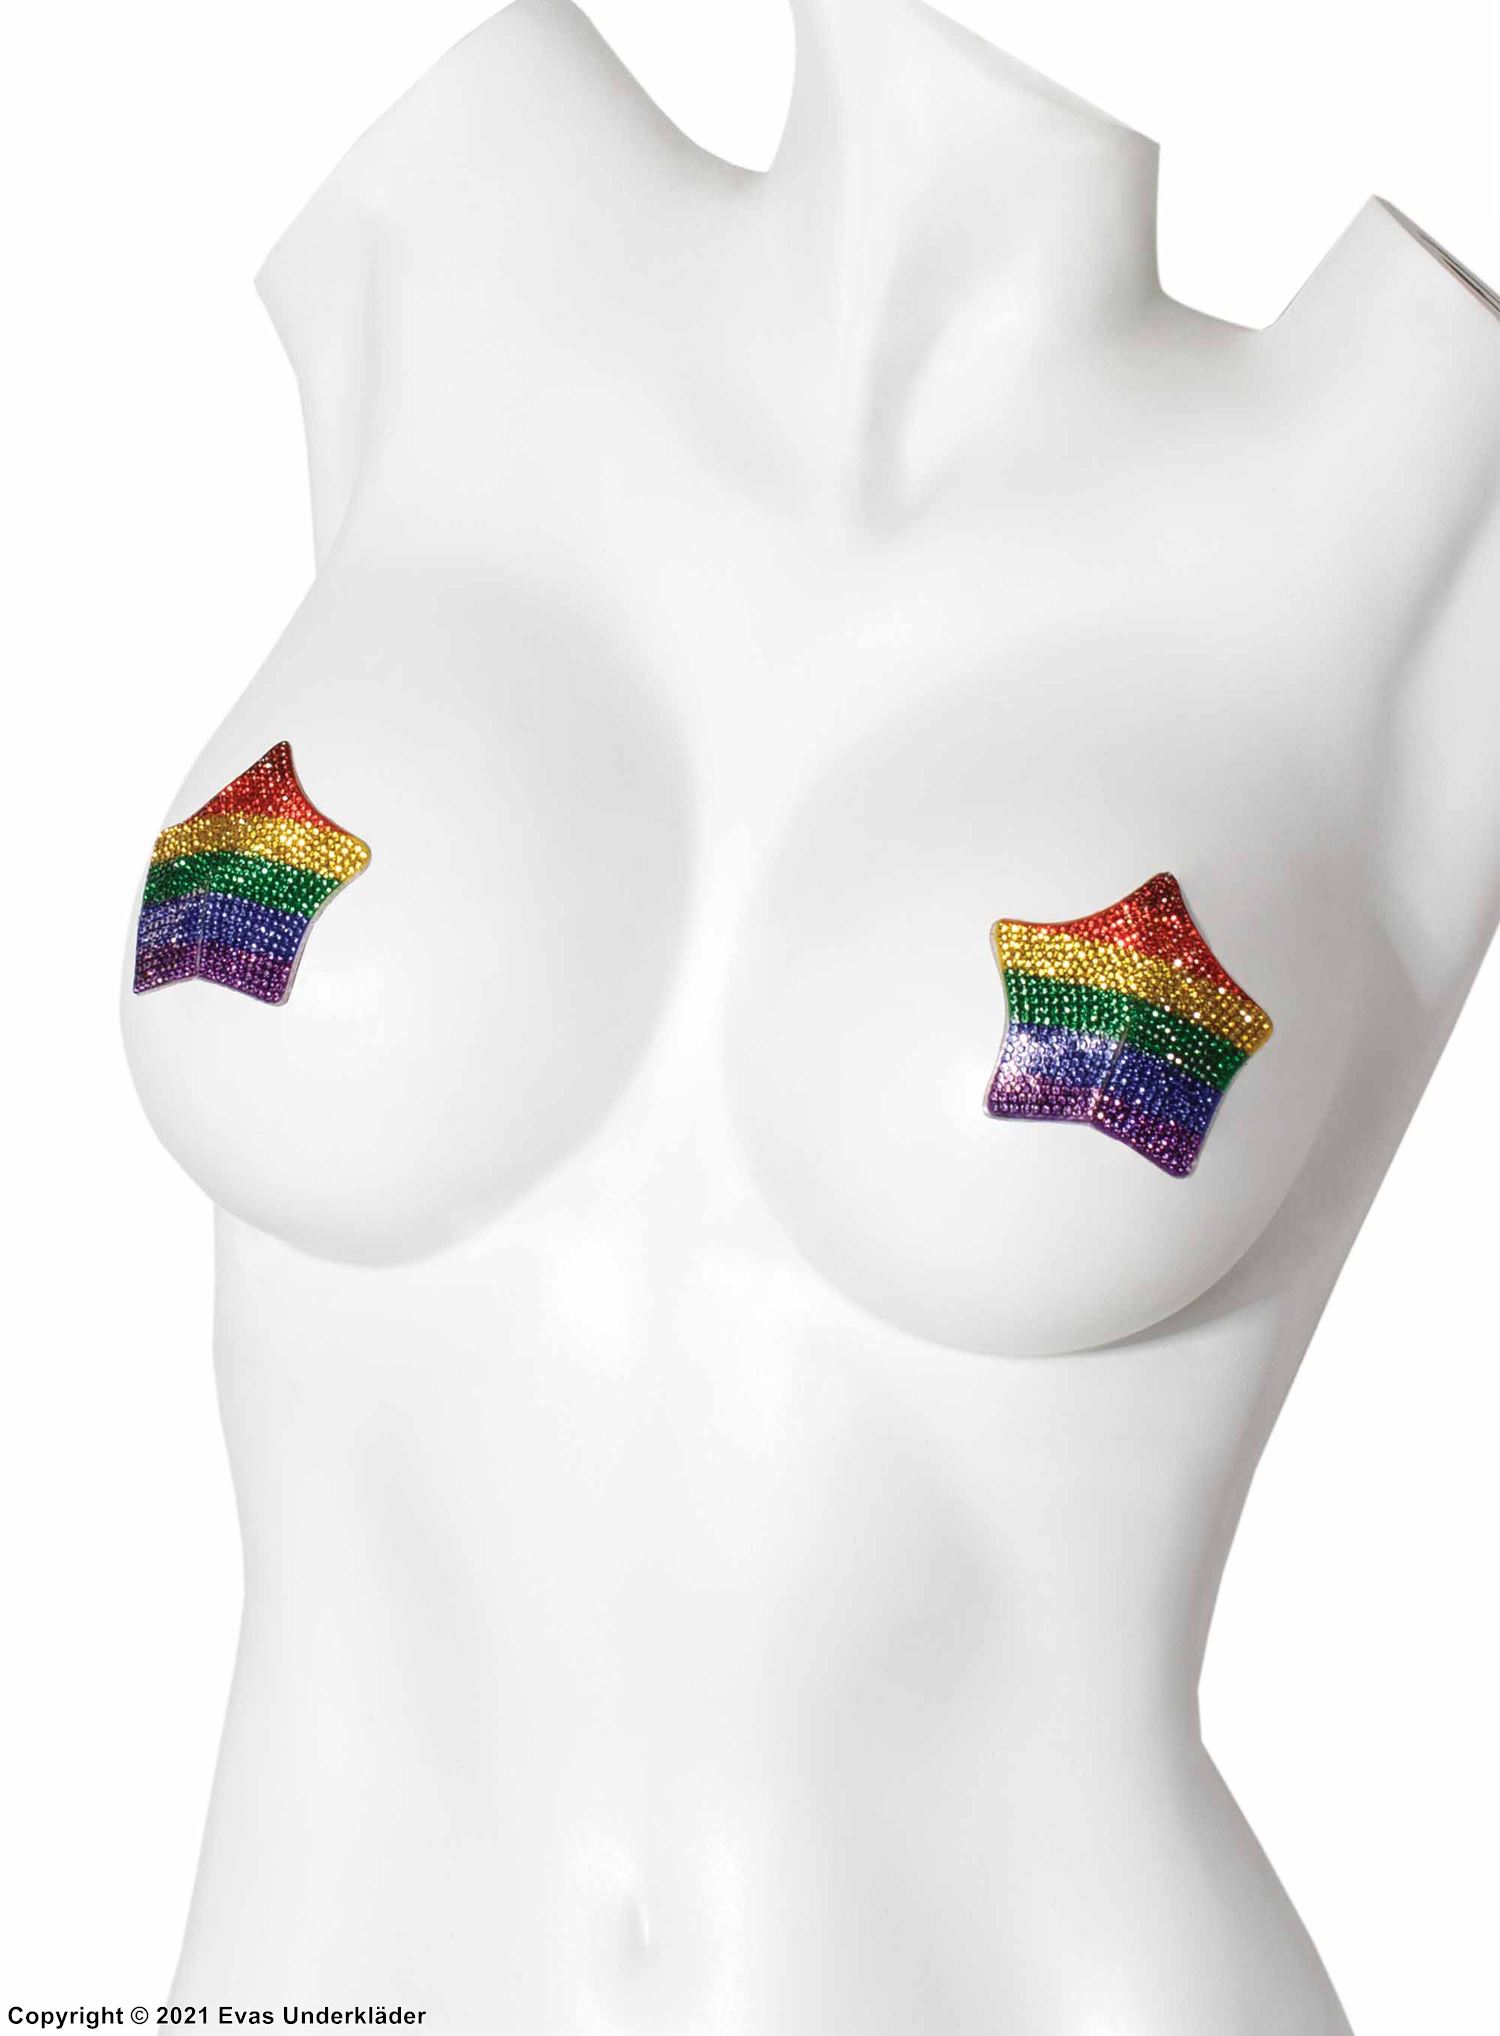 Self-adhesive nipple cover/patch, rhinestones, stars, rainbow color